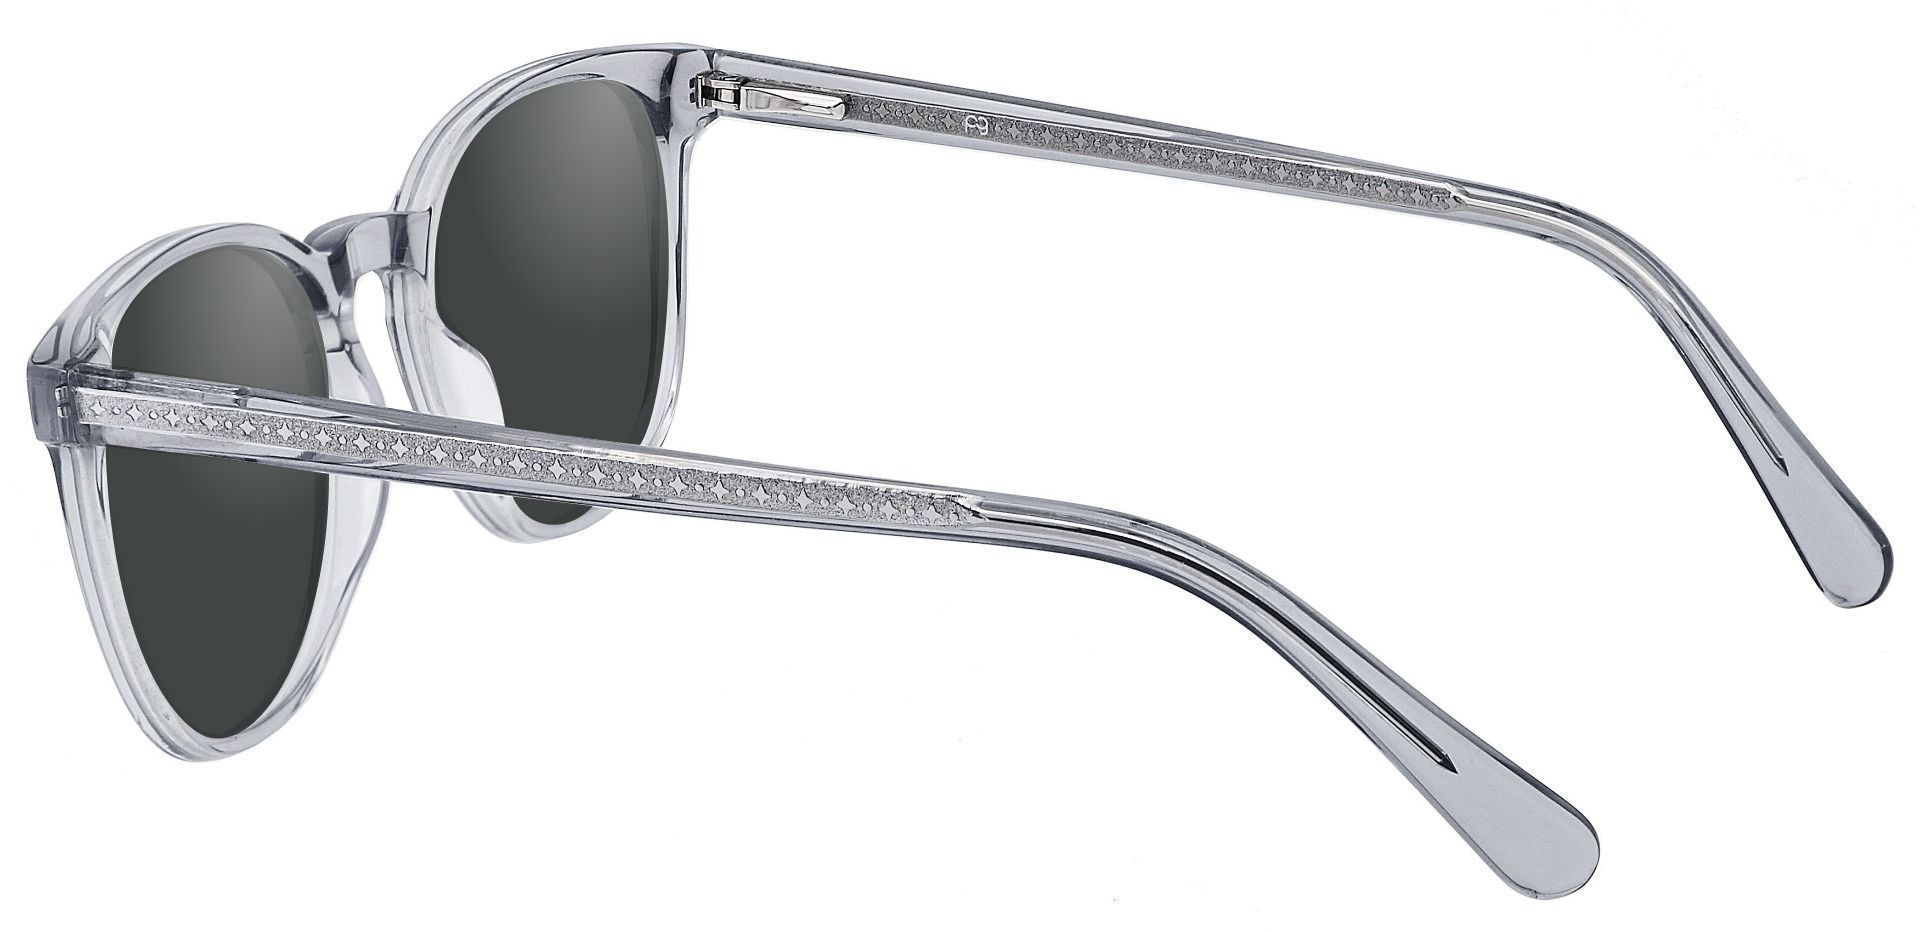 Nebula Round Reading Sunglasses - Gray Frame With Gray Lenses